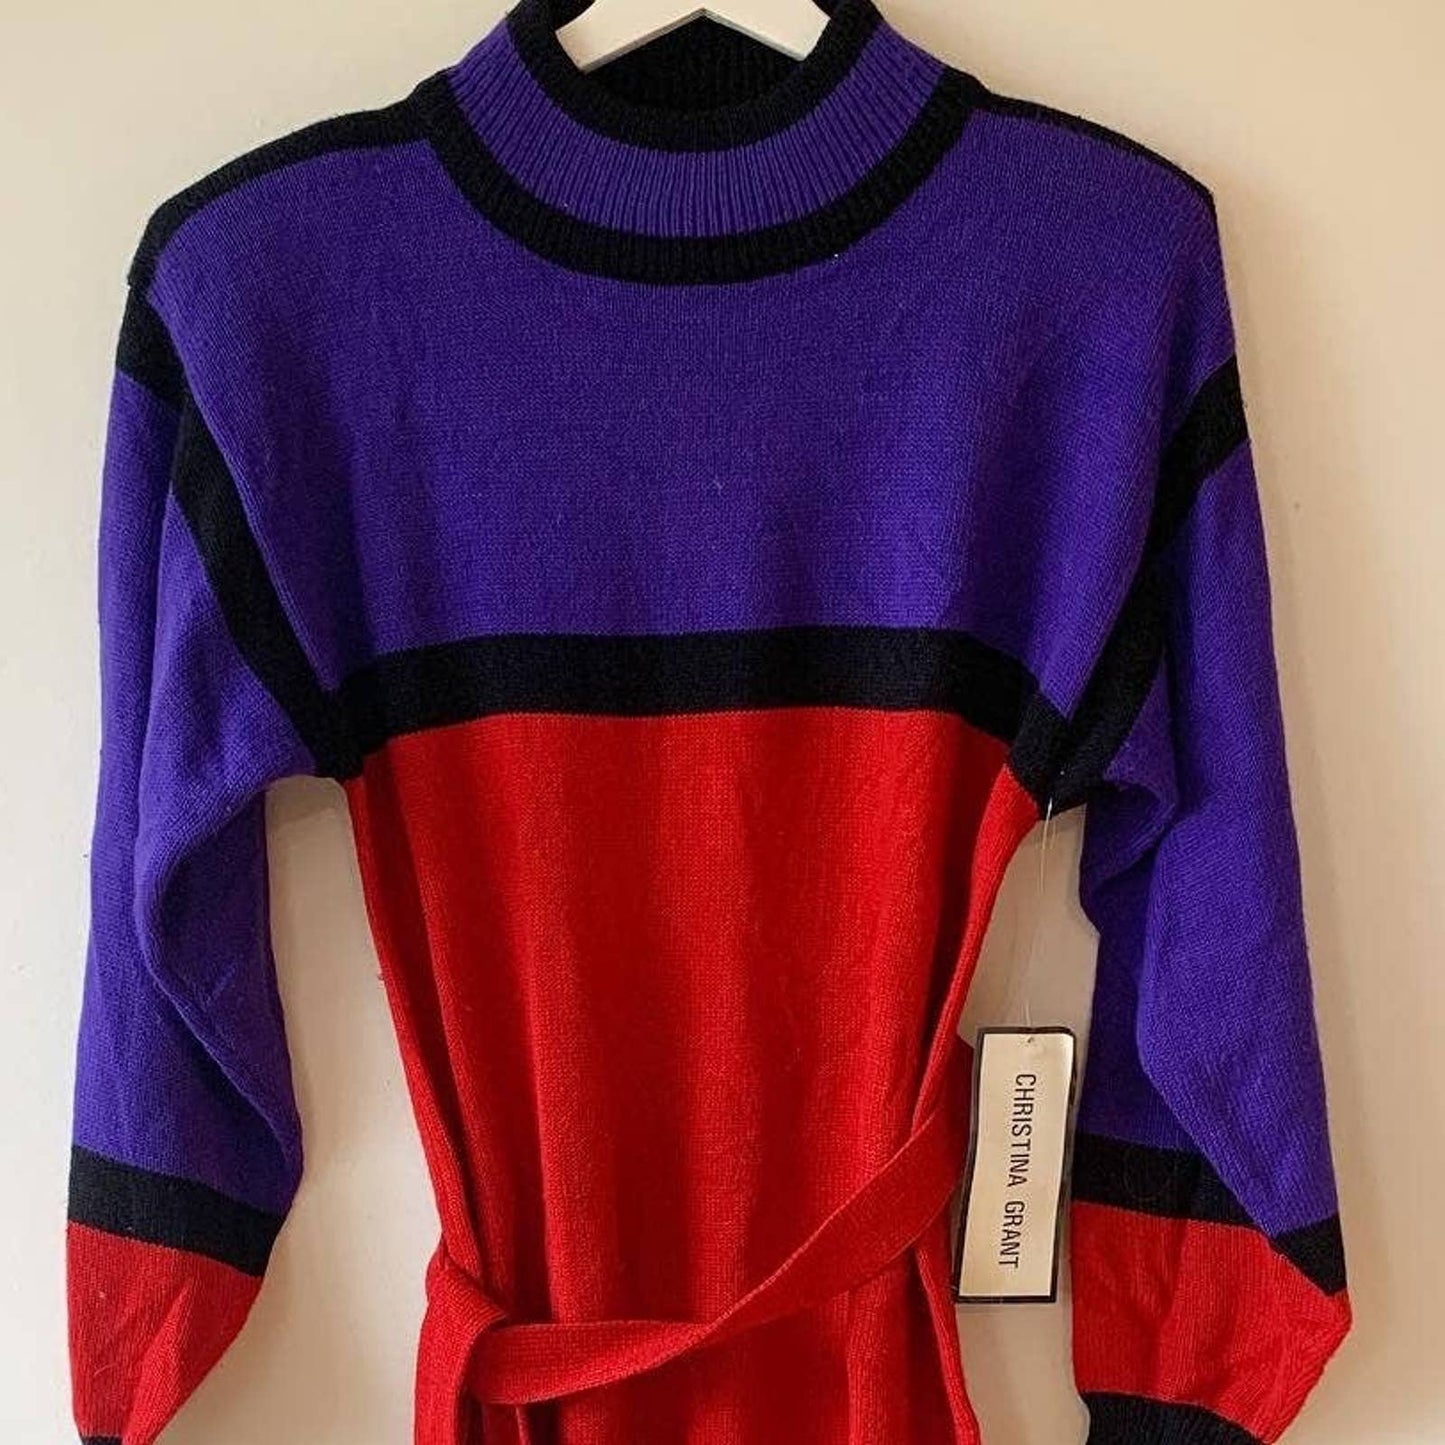 Vintage Christina Grant Purple Red Color Block Sweater Dress